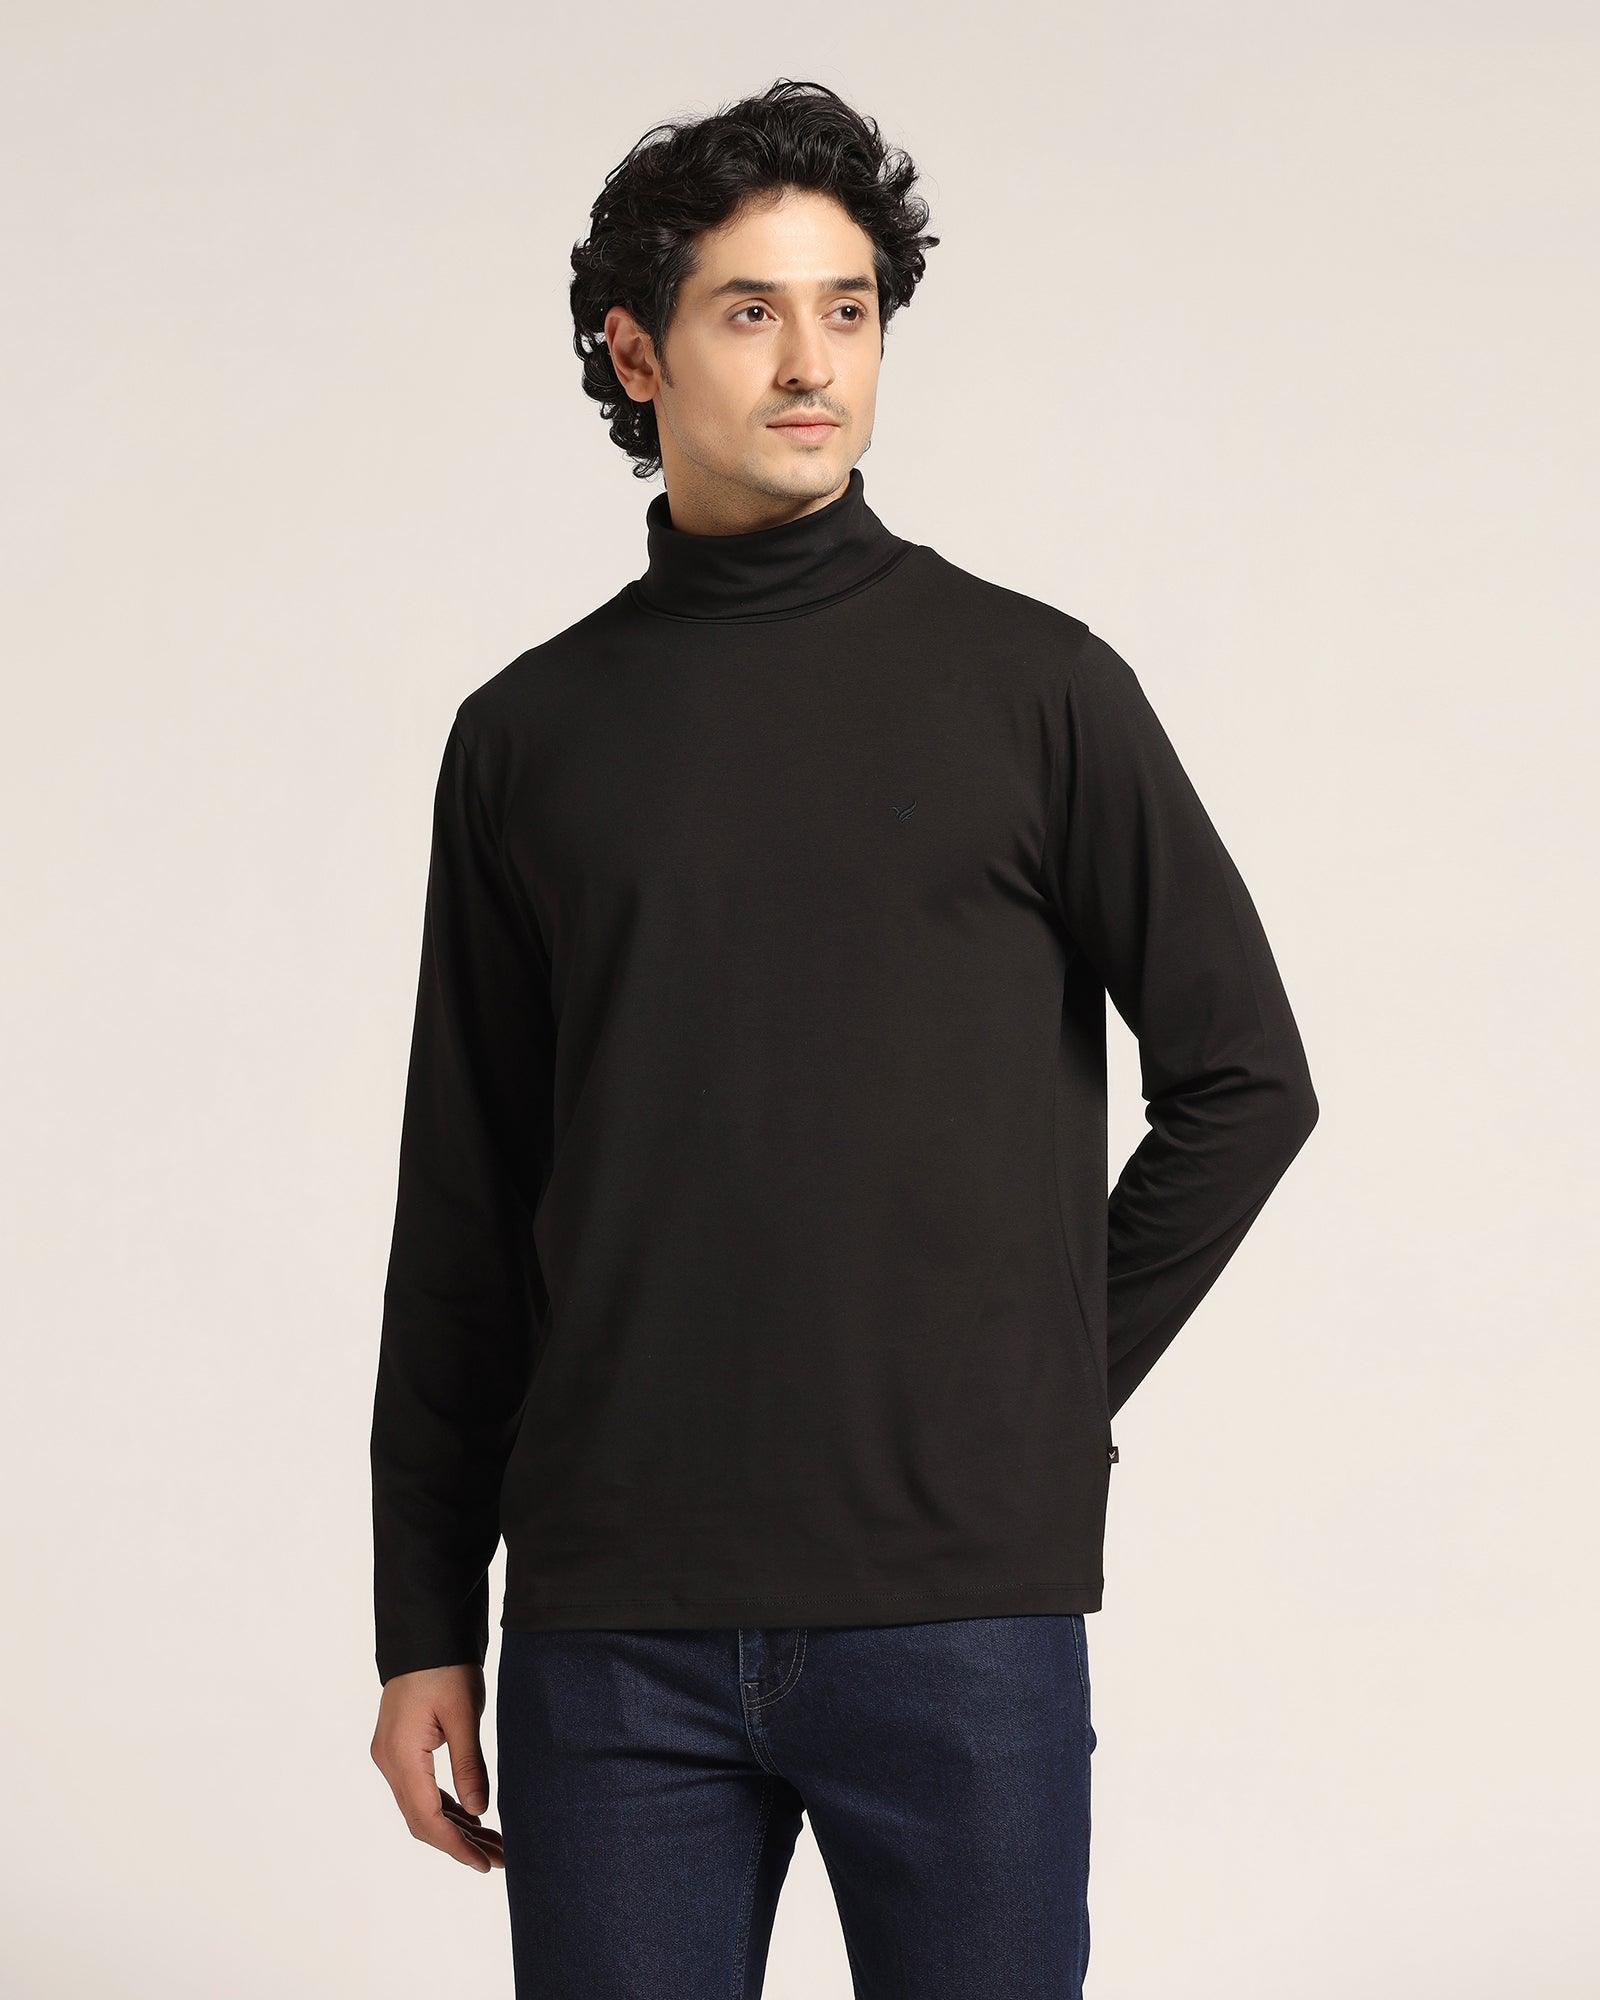 Turtle Neck Black Solid T Shirt - Kimmy